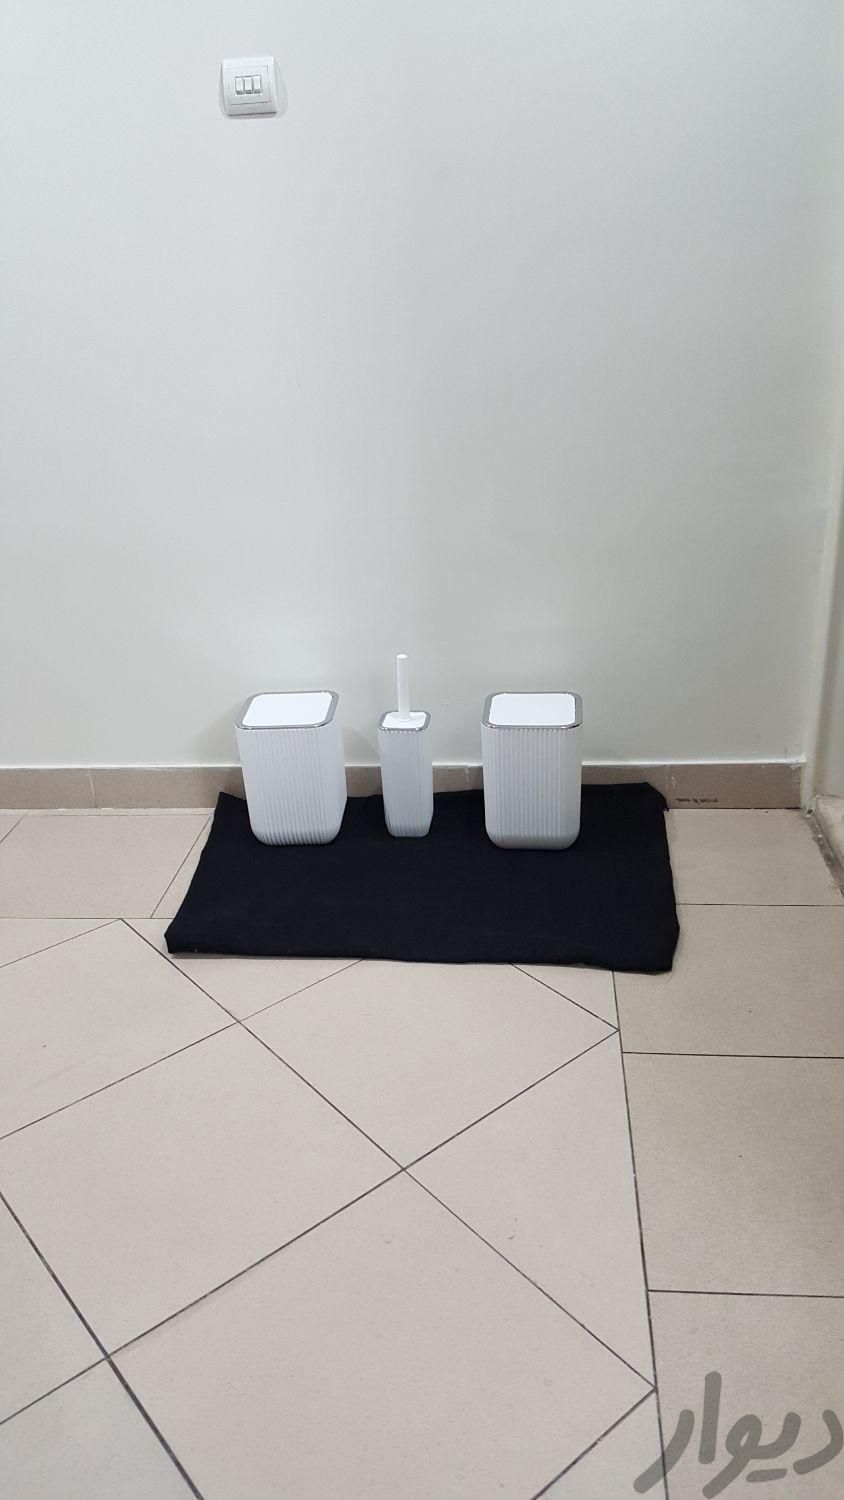 دوتا سطل و یک فرچه توالت|لوازم سرویس بهداشتی|تهران, پونک|دیوار